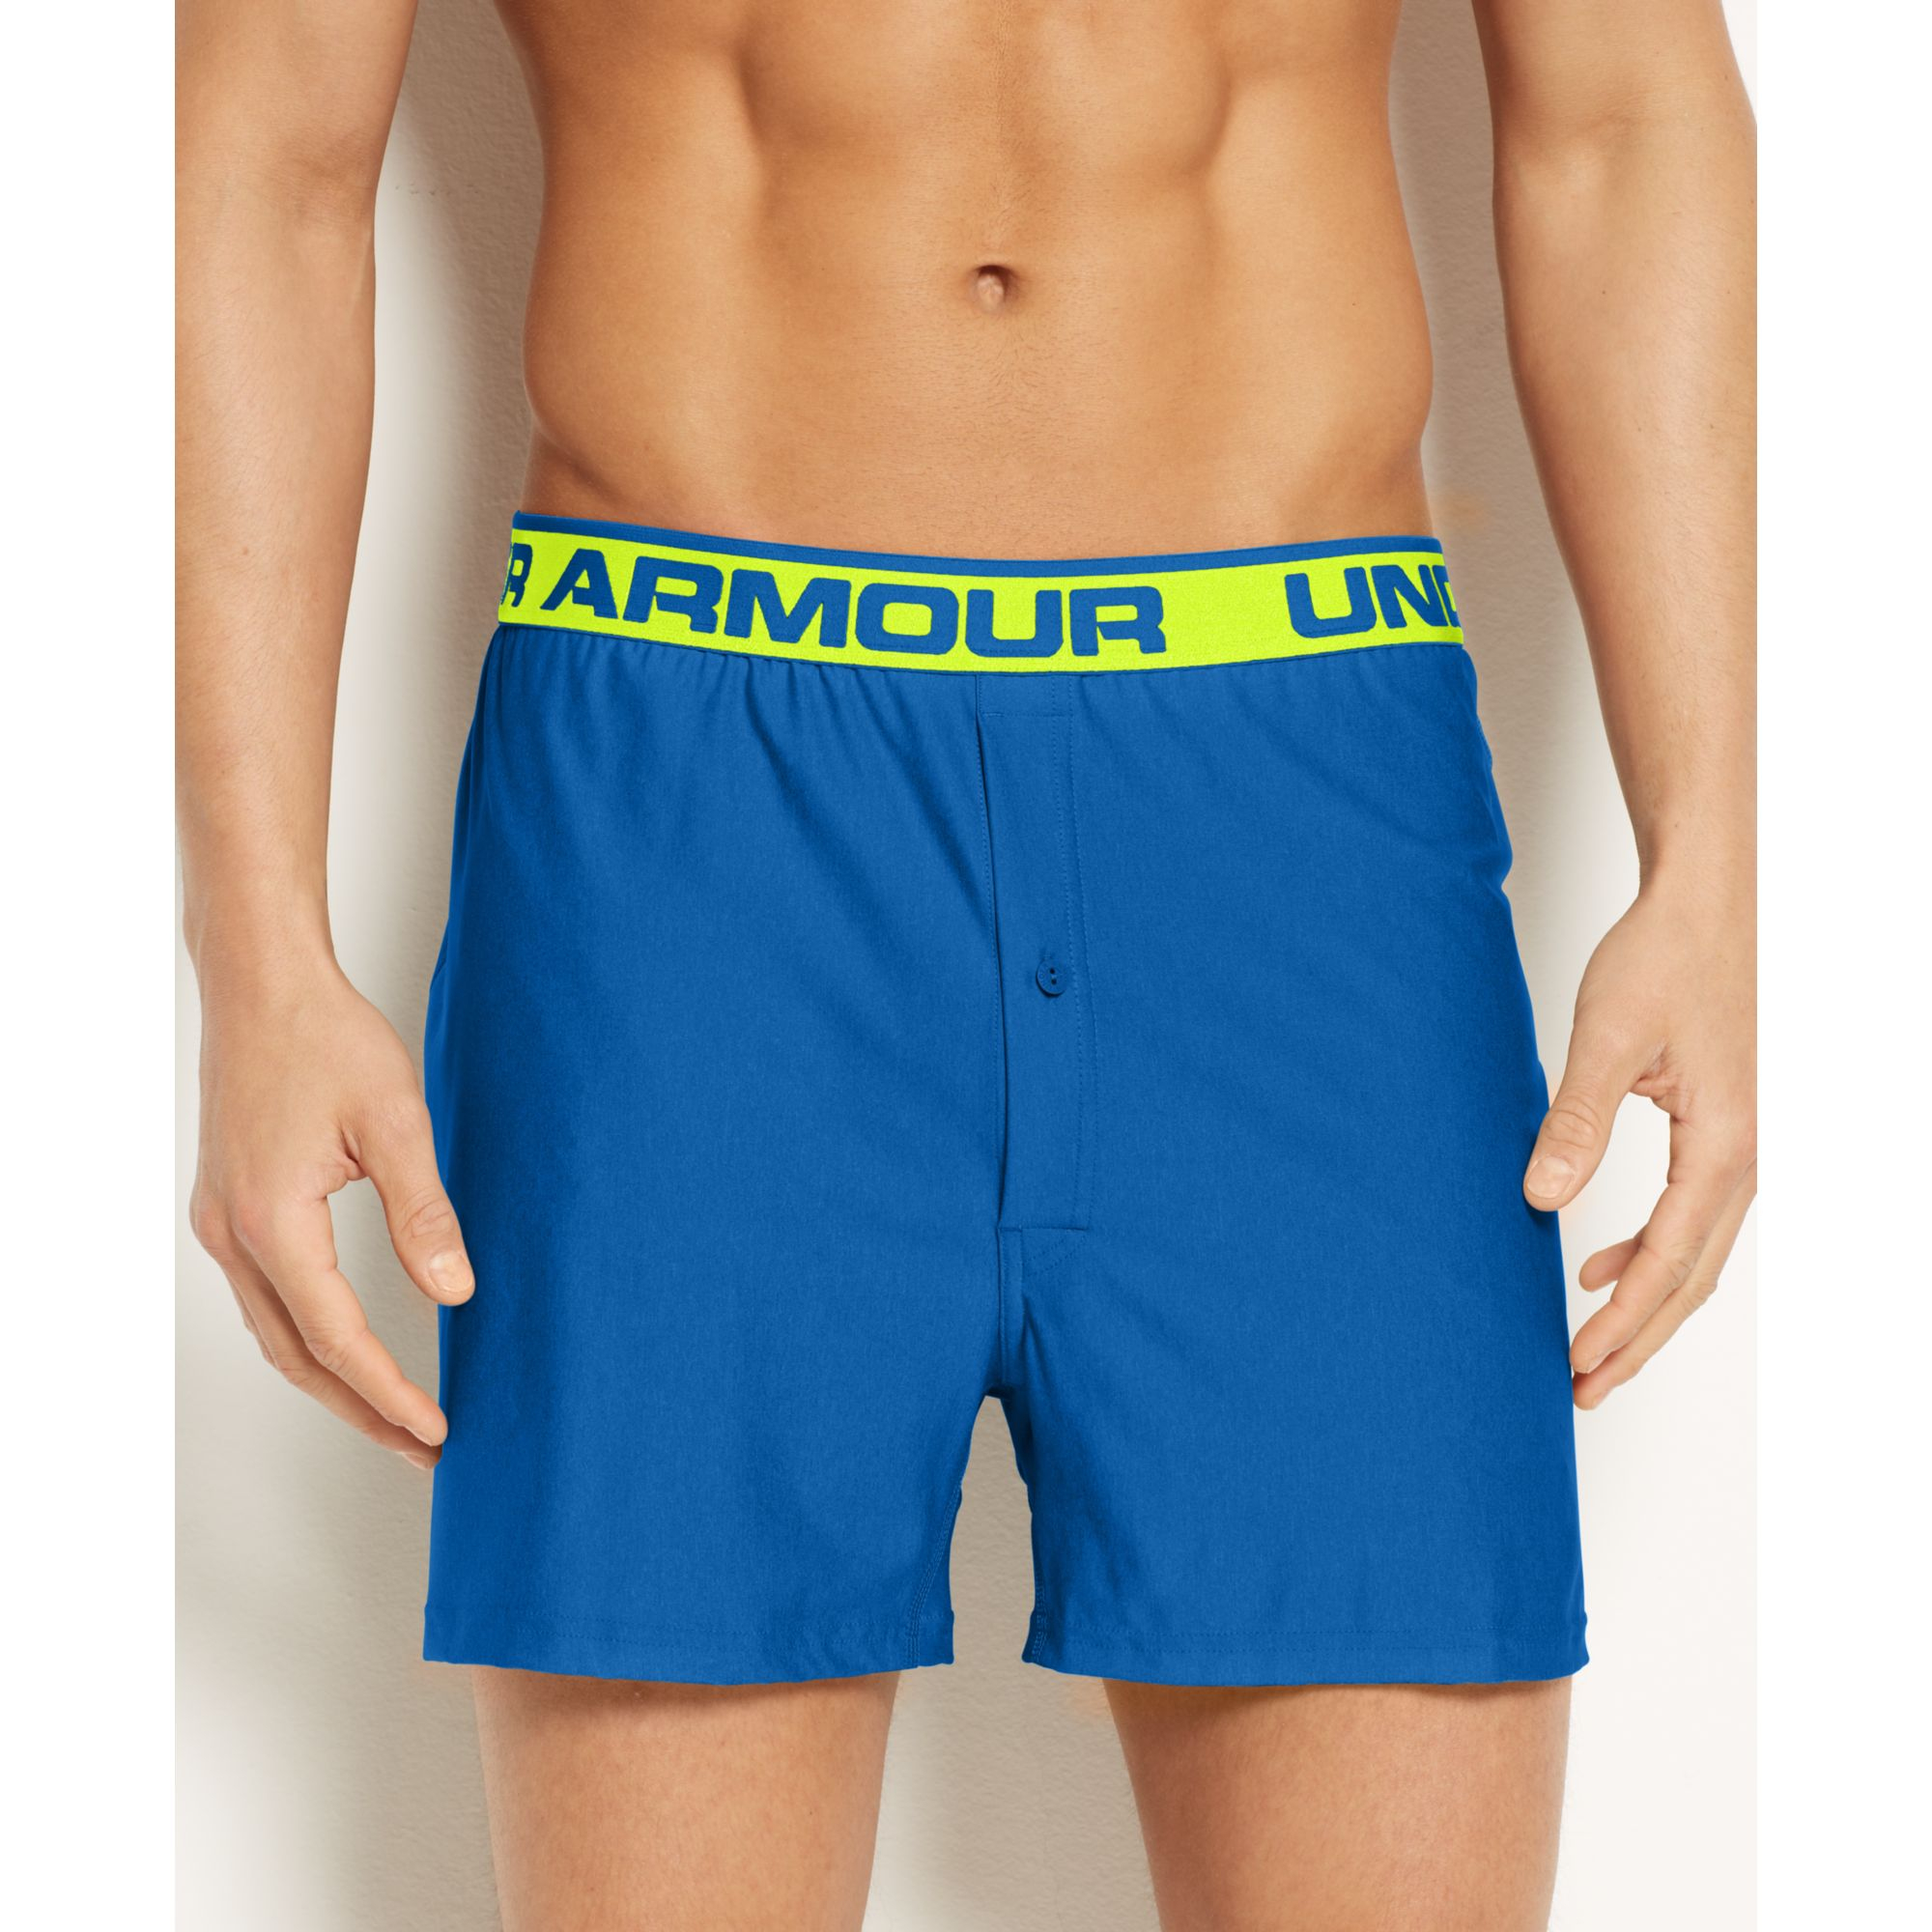 Under Armour Original Knit Boxer Loose Fit in Blue for Men